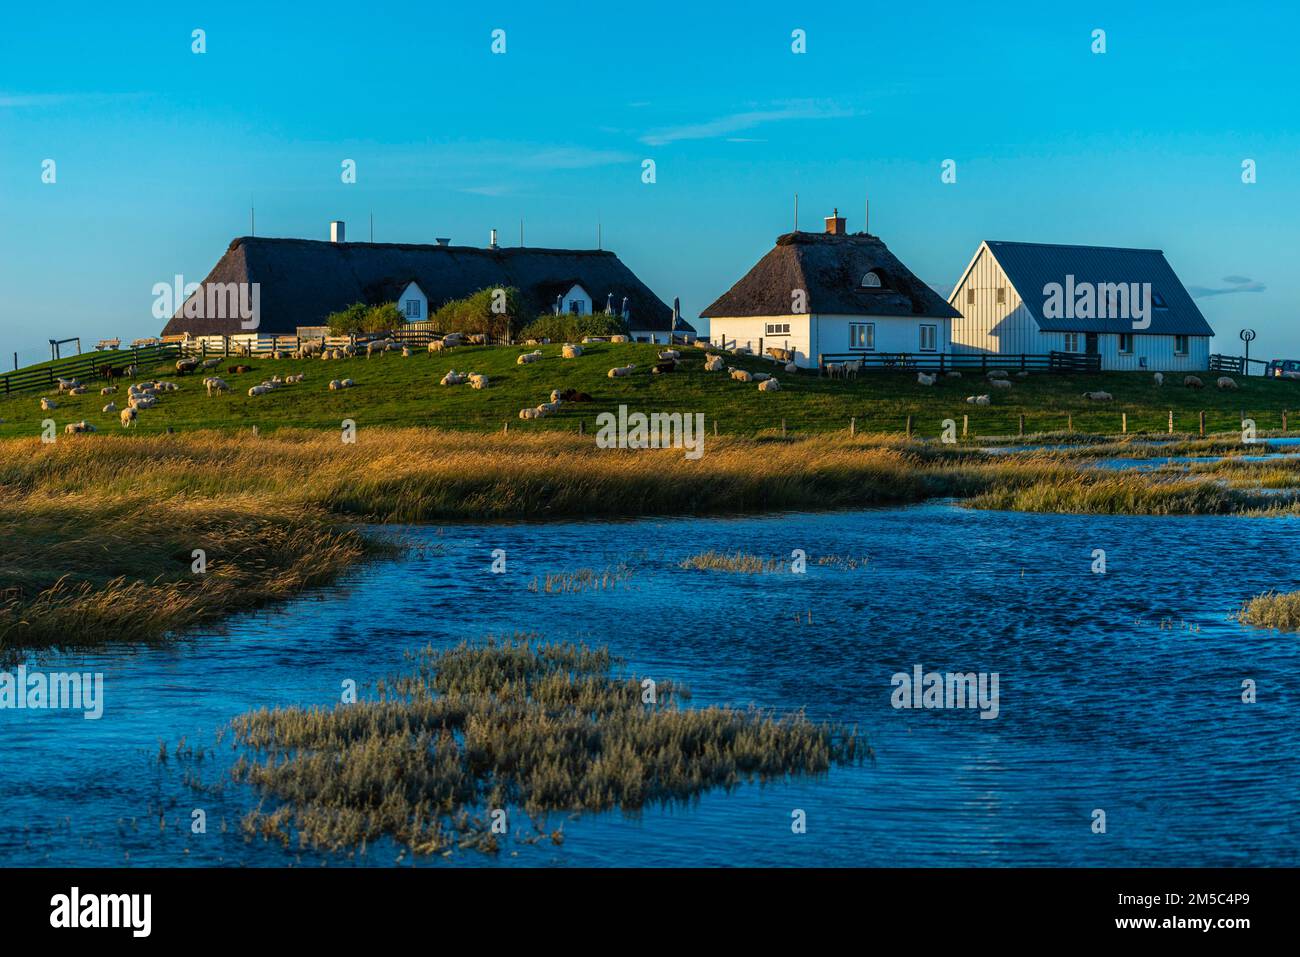 Hamburger Hallig, Reussenkoege, North Frisia, dwelling mound, reed houses, grasses, sheep, evening light, blue sky, Schleswig-Holstein, North Stock Photo